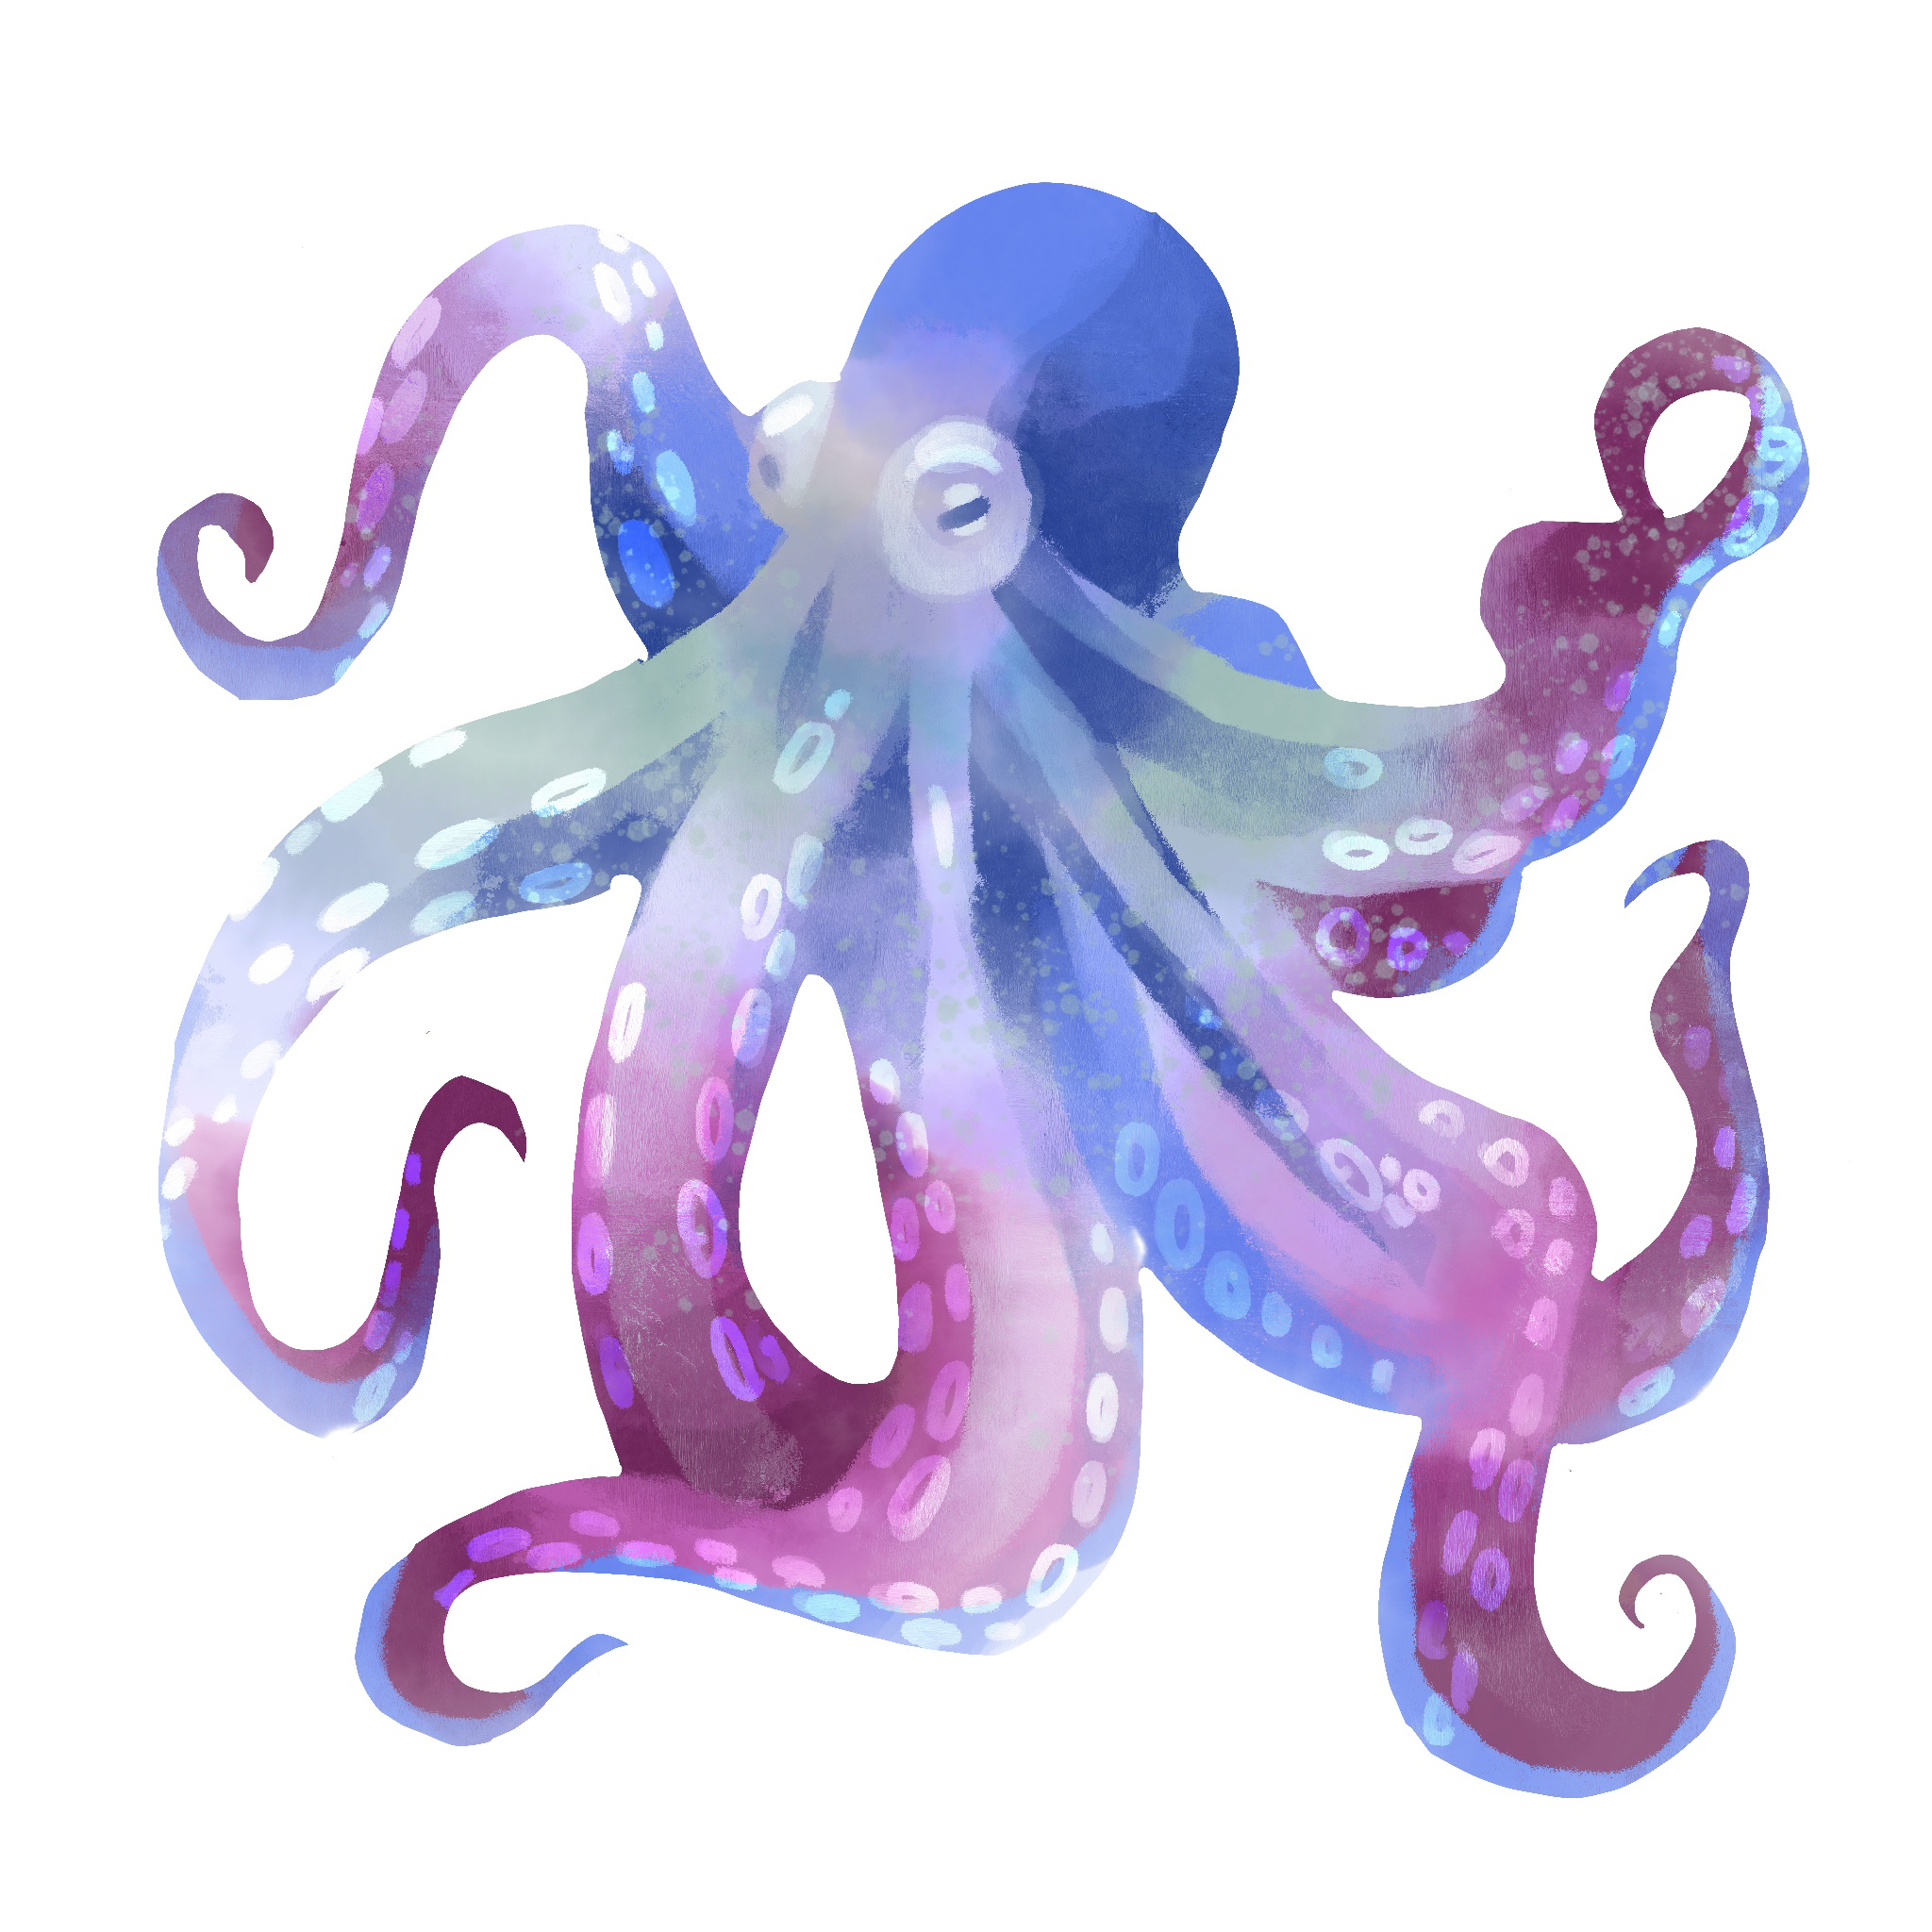 Octopus (Ryan McQuade)